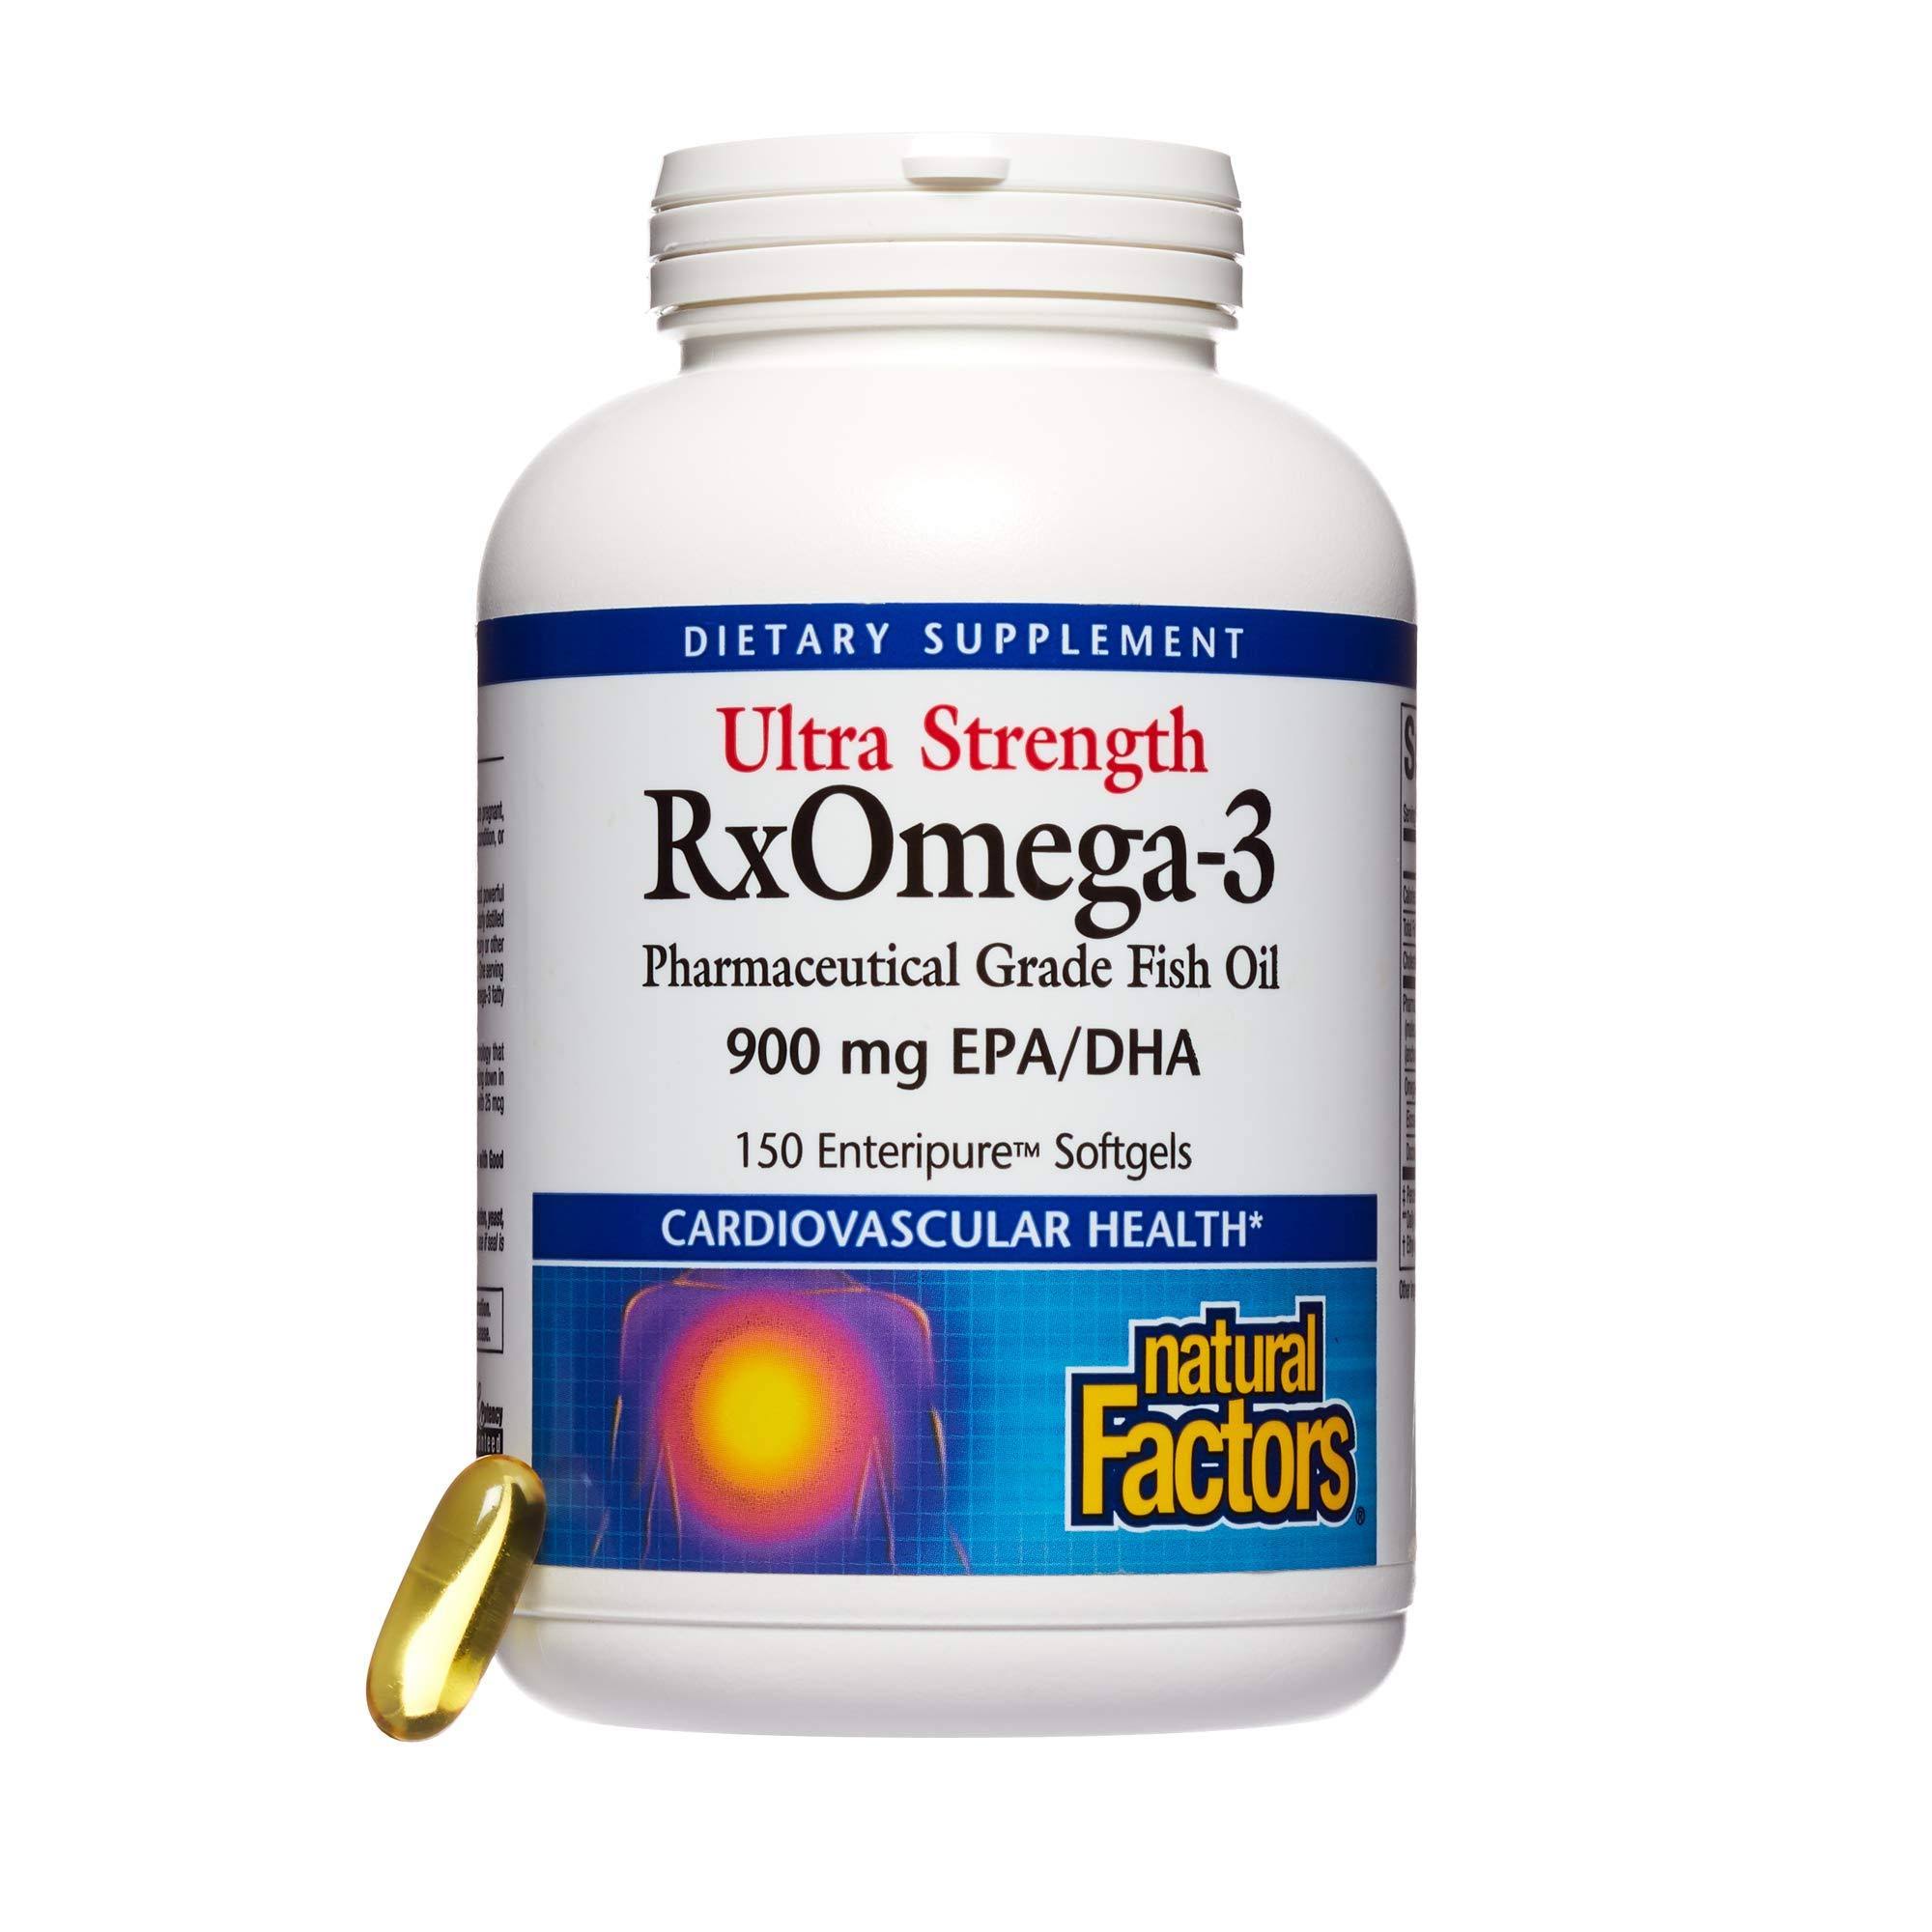 Natural Factors Ultra Strength Rxomega-3 Supplement - 150 Enteripure Softgels